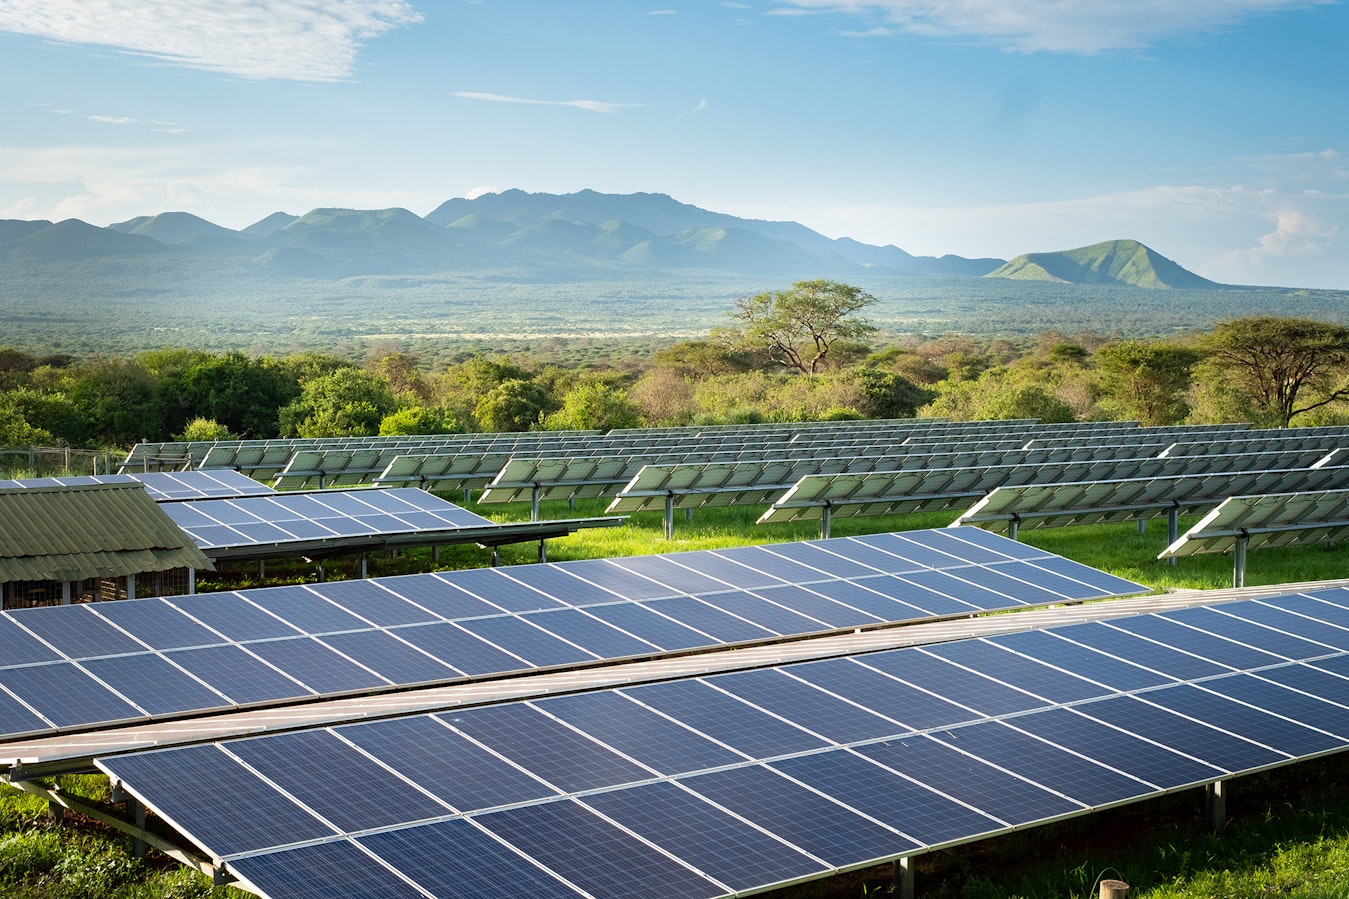 Solar panels have greatly reduced the carbon footprint of Kilaguni Serena Safari Lodge in Tsavo West National Park, Kenya’s first fully solar powered hotel.